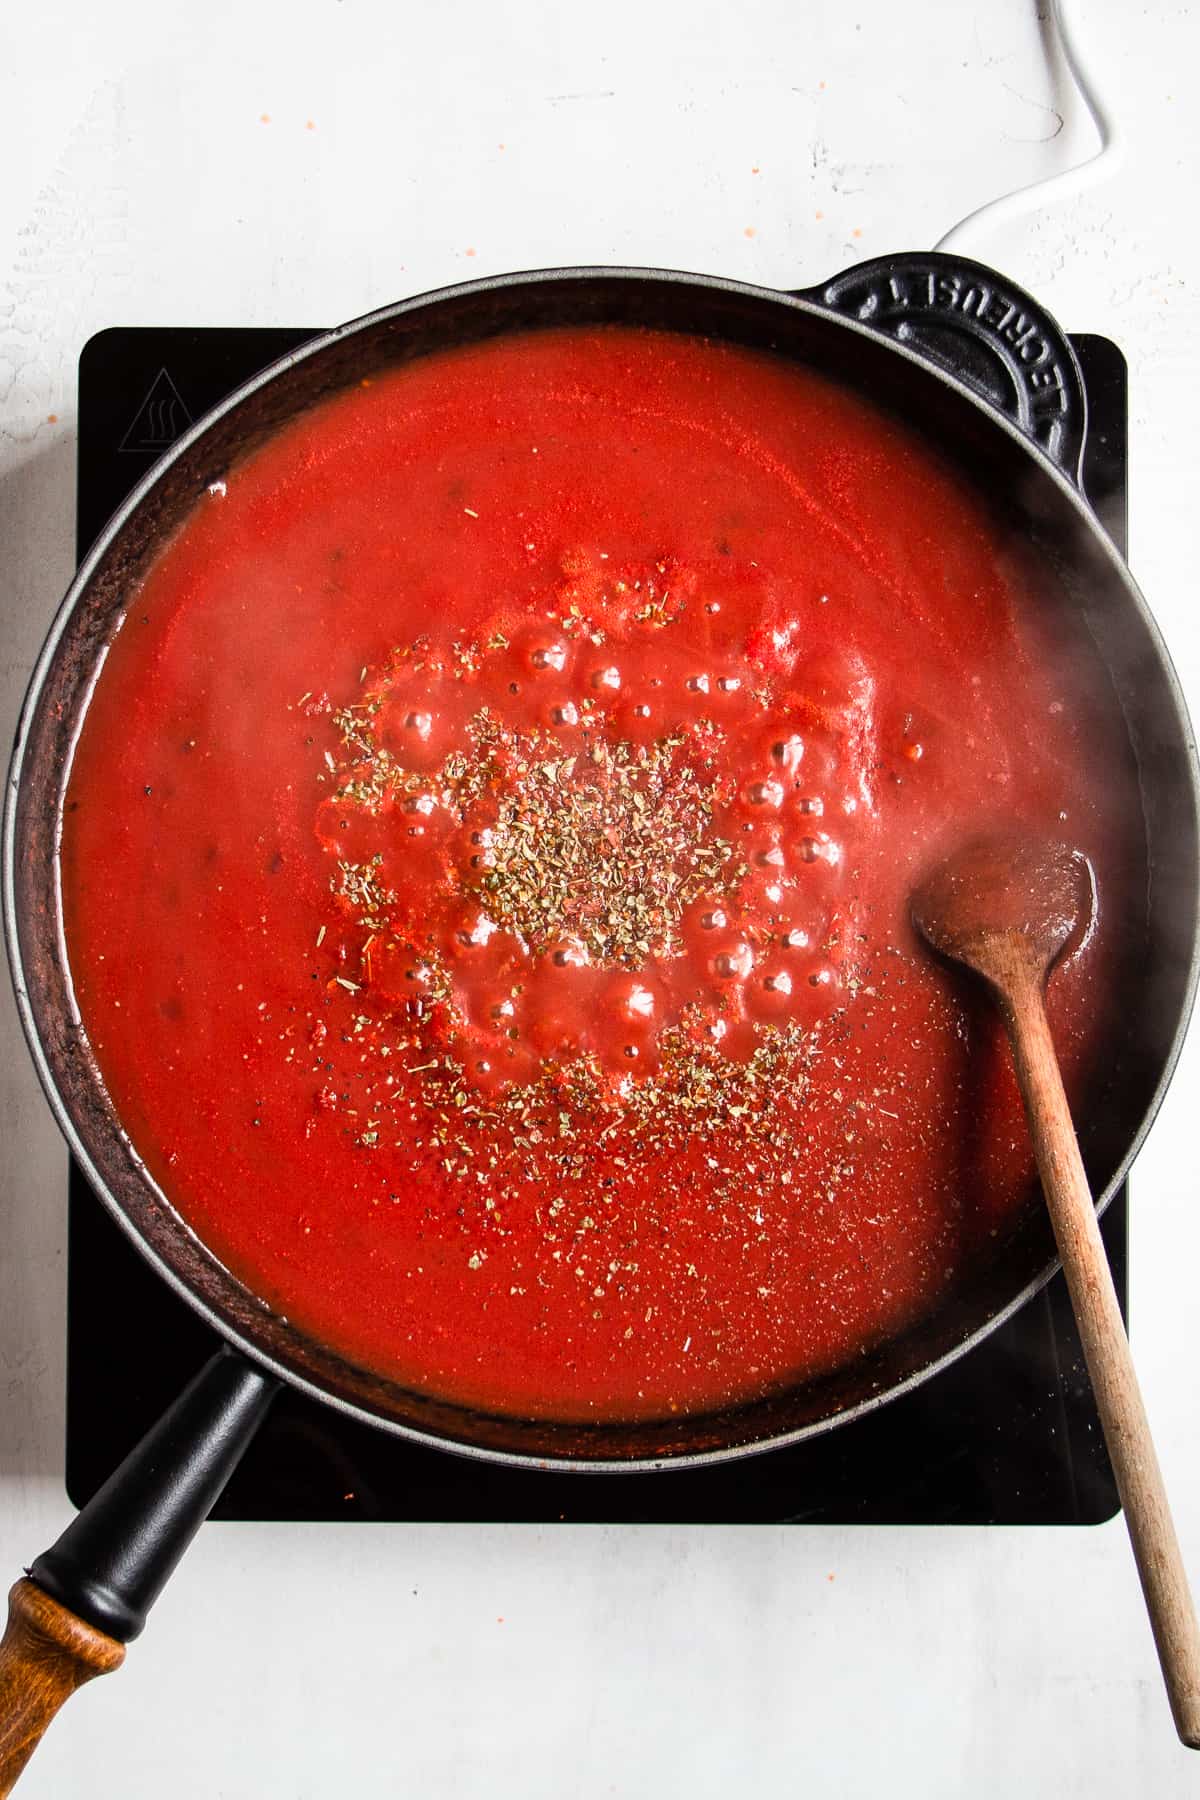 Simmering passata tomato sauce in a black pan.